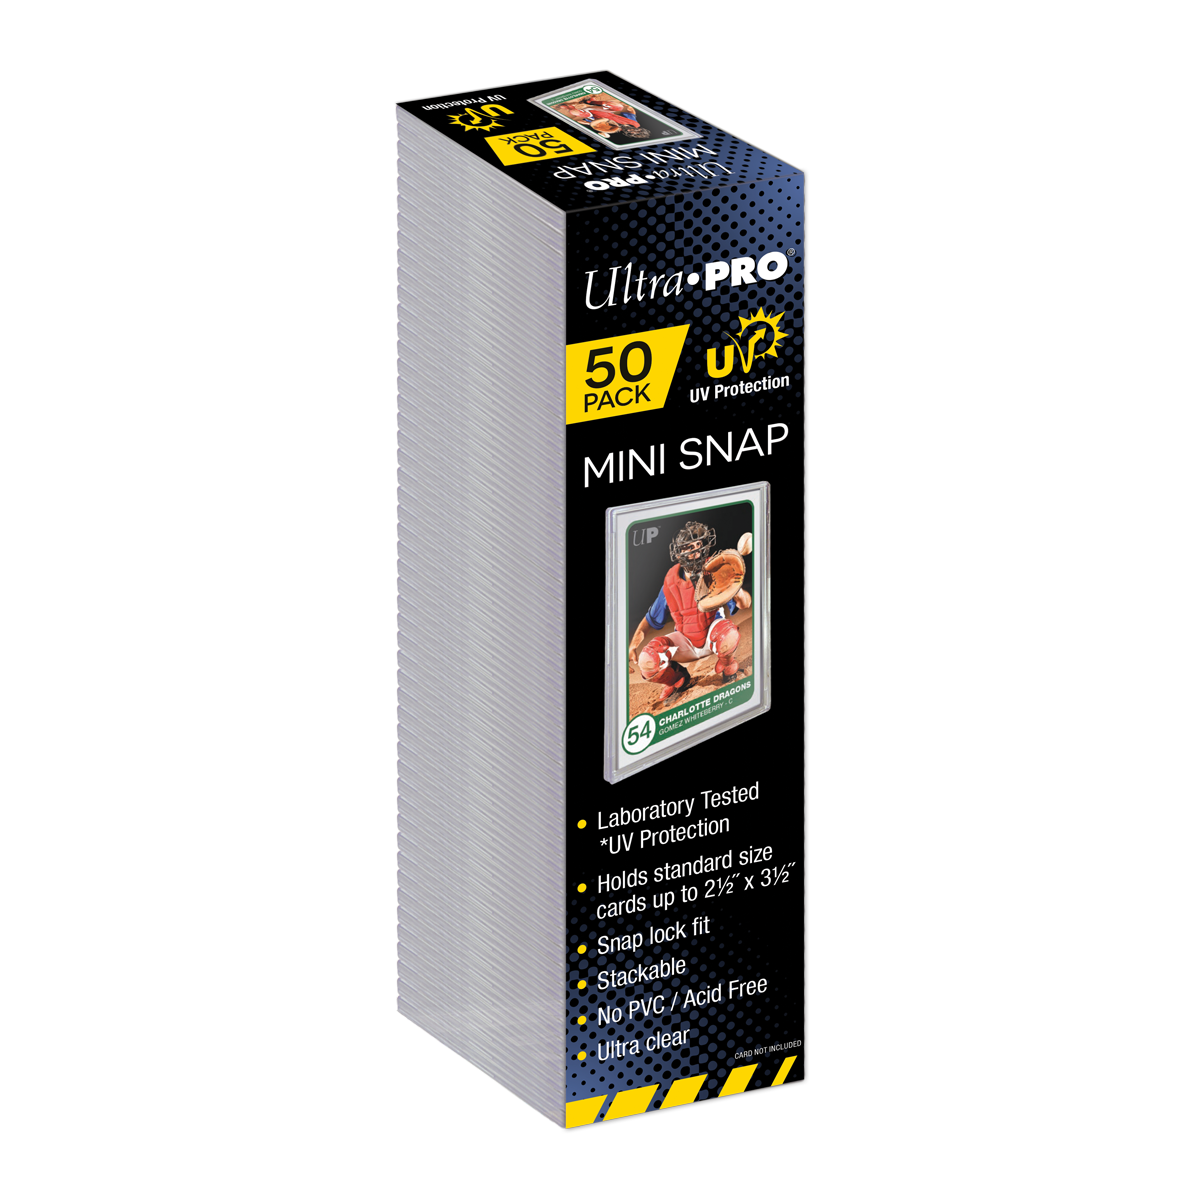 Toploaders Combo (25ct)  Ultra PRO International